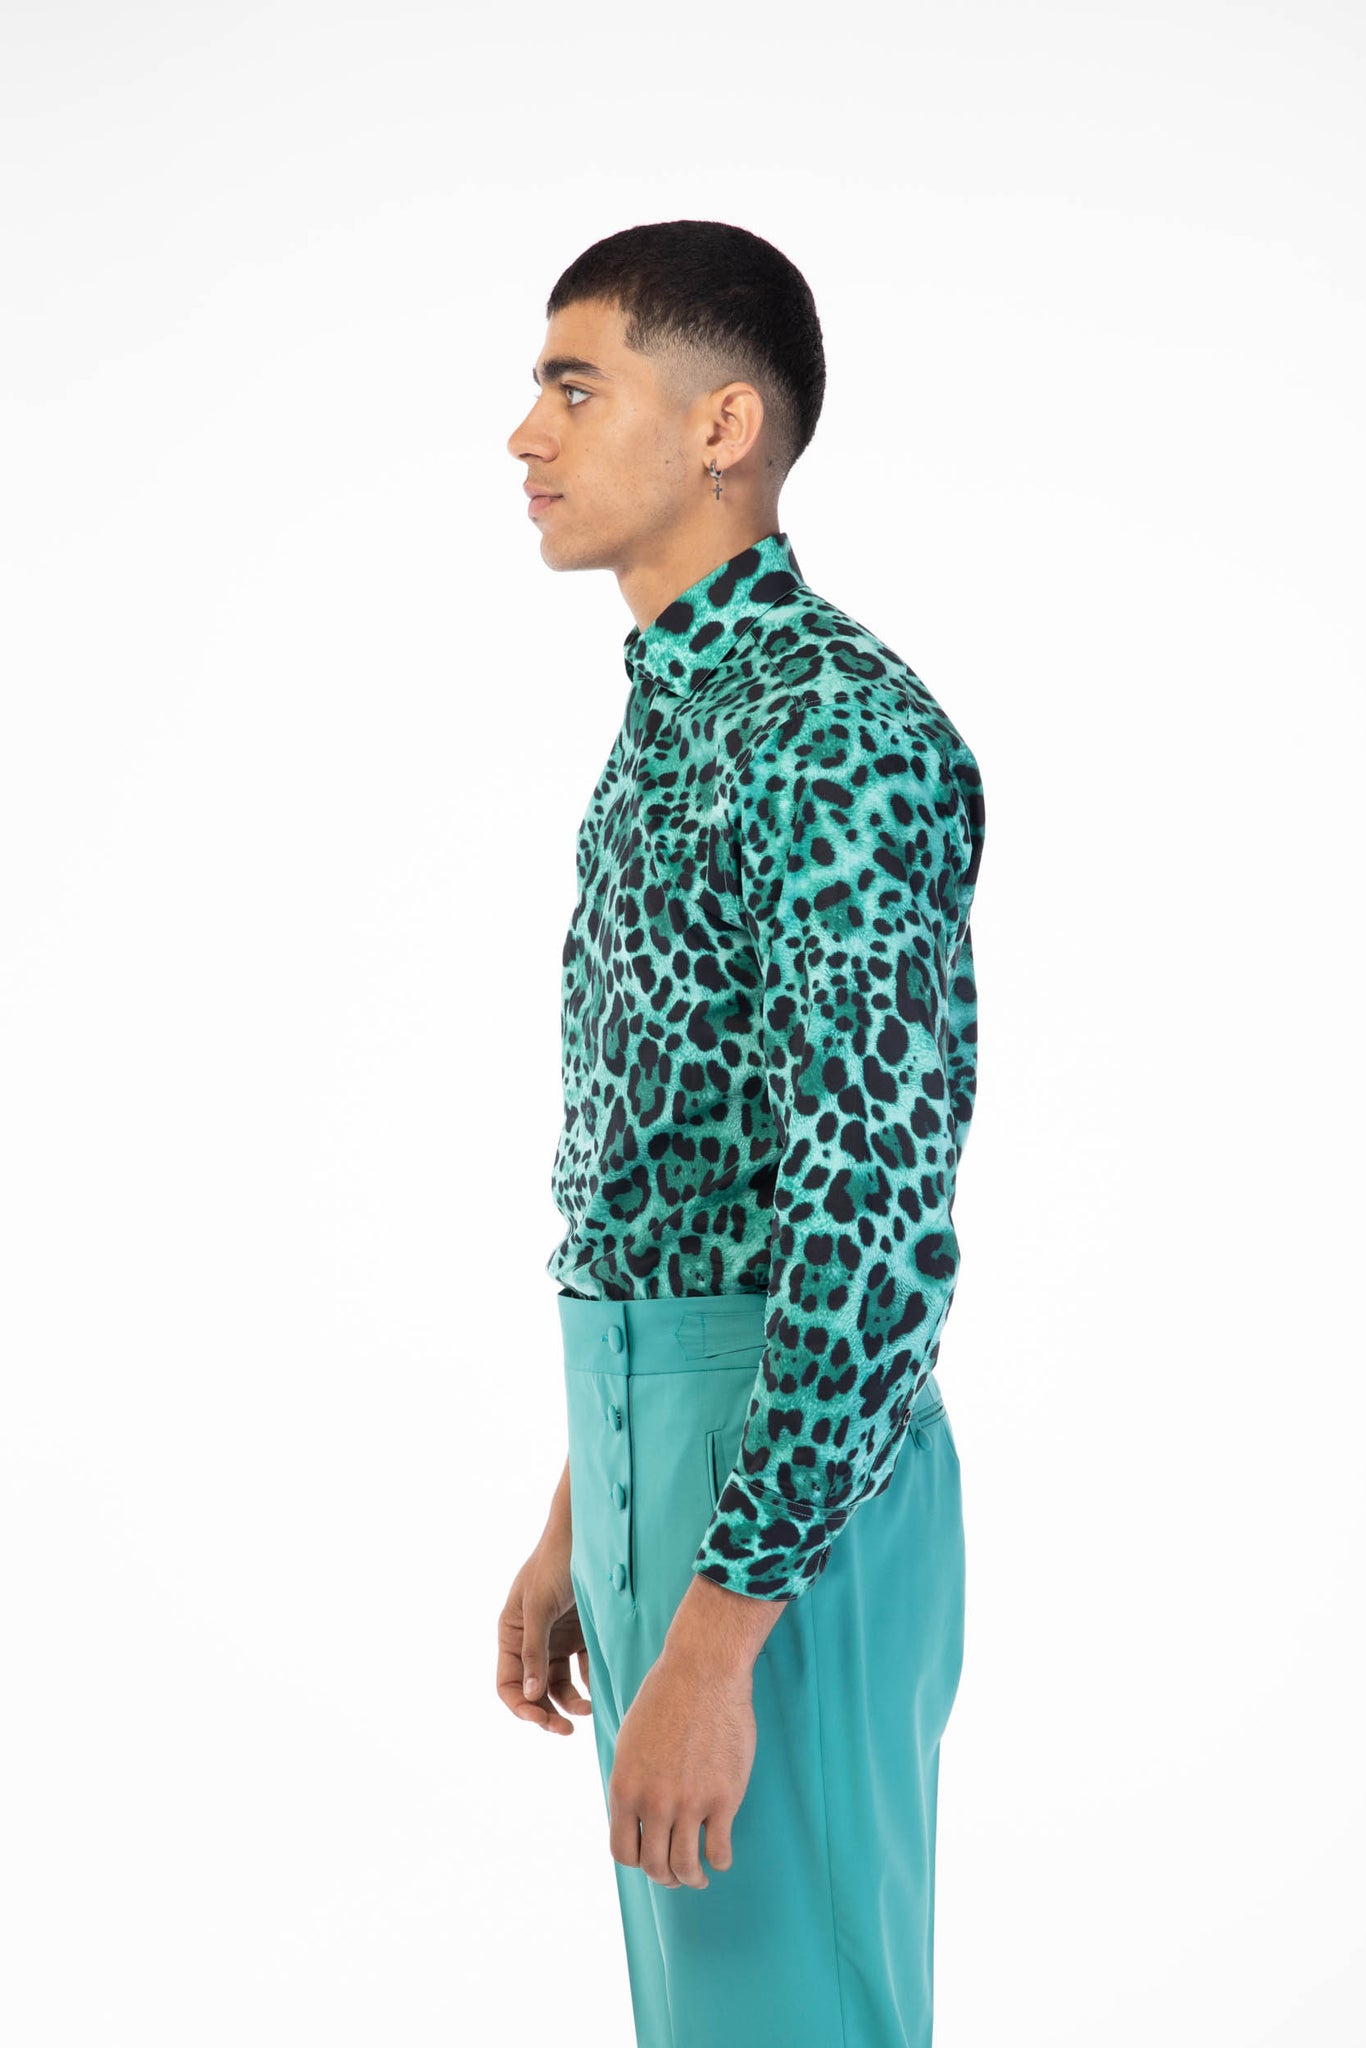 Wildlife Teal, black Leopard Long Sleeve Cotton Shirt